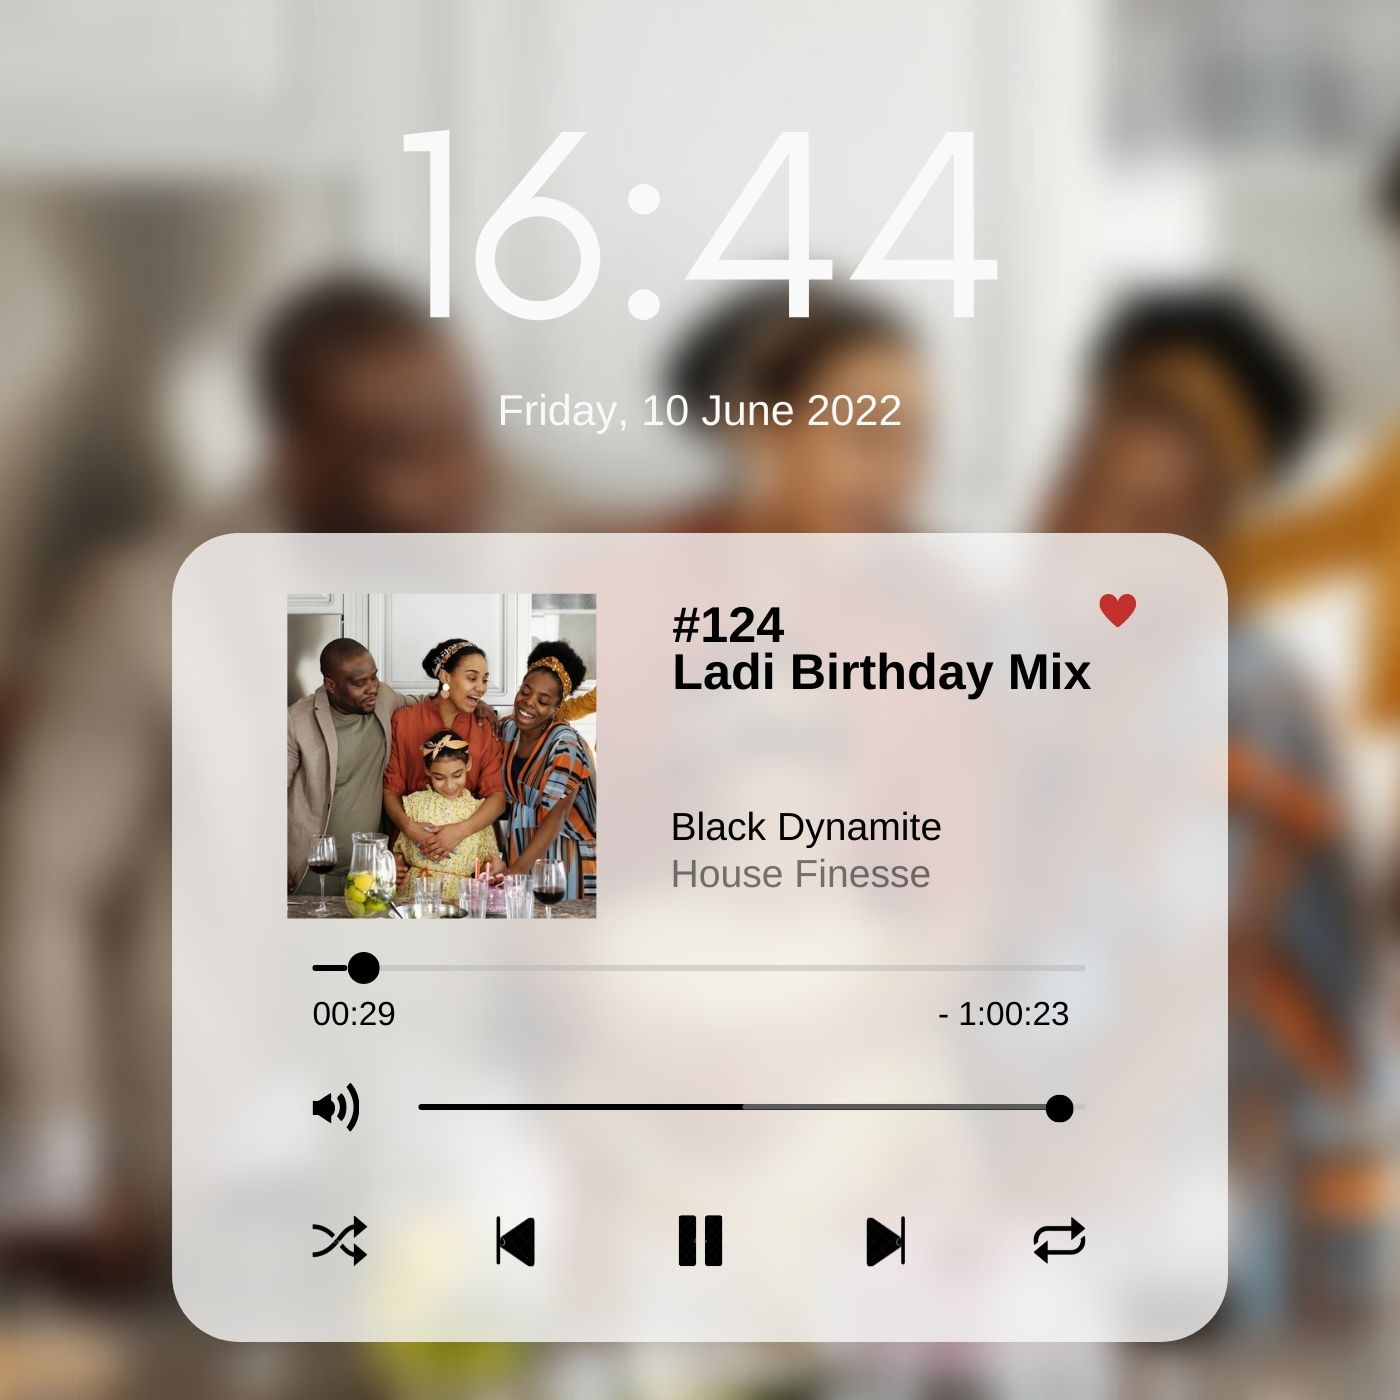 Ladi Birthday Mix with Black Dynamite